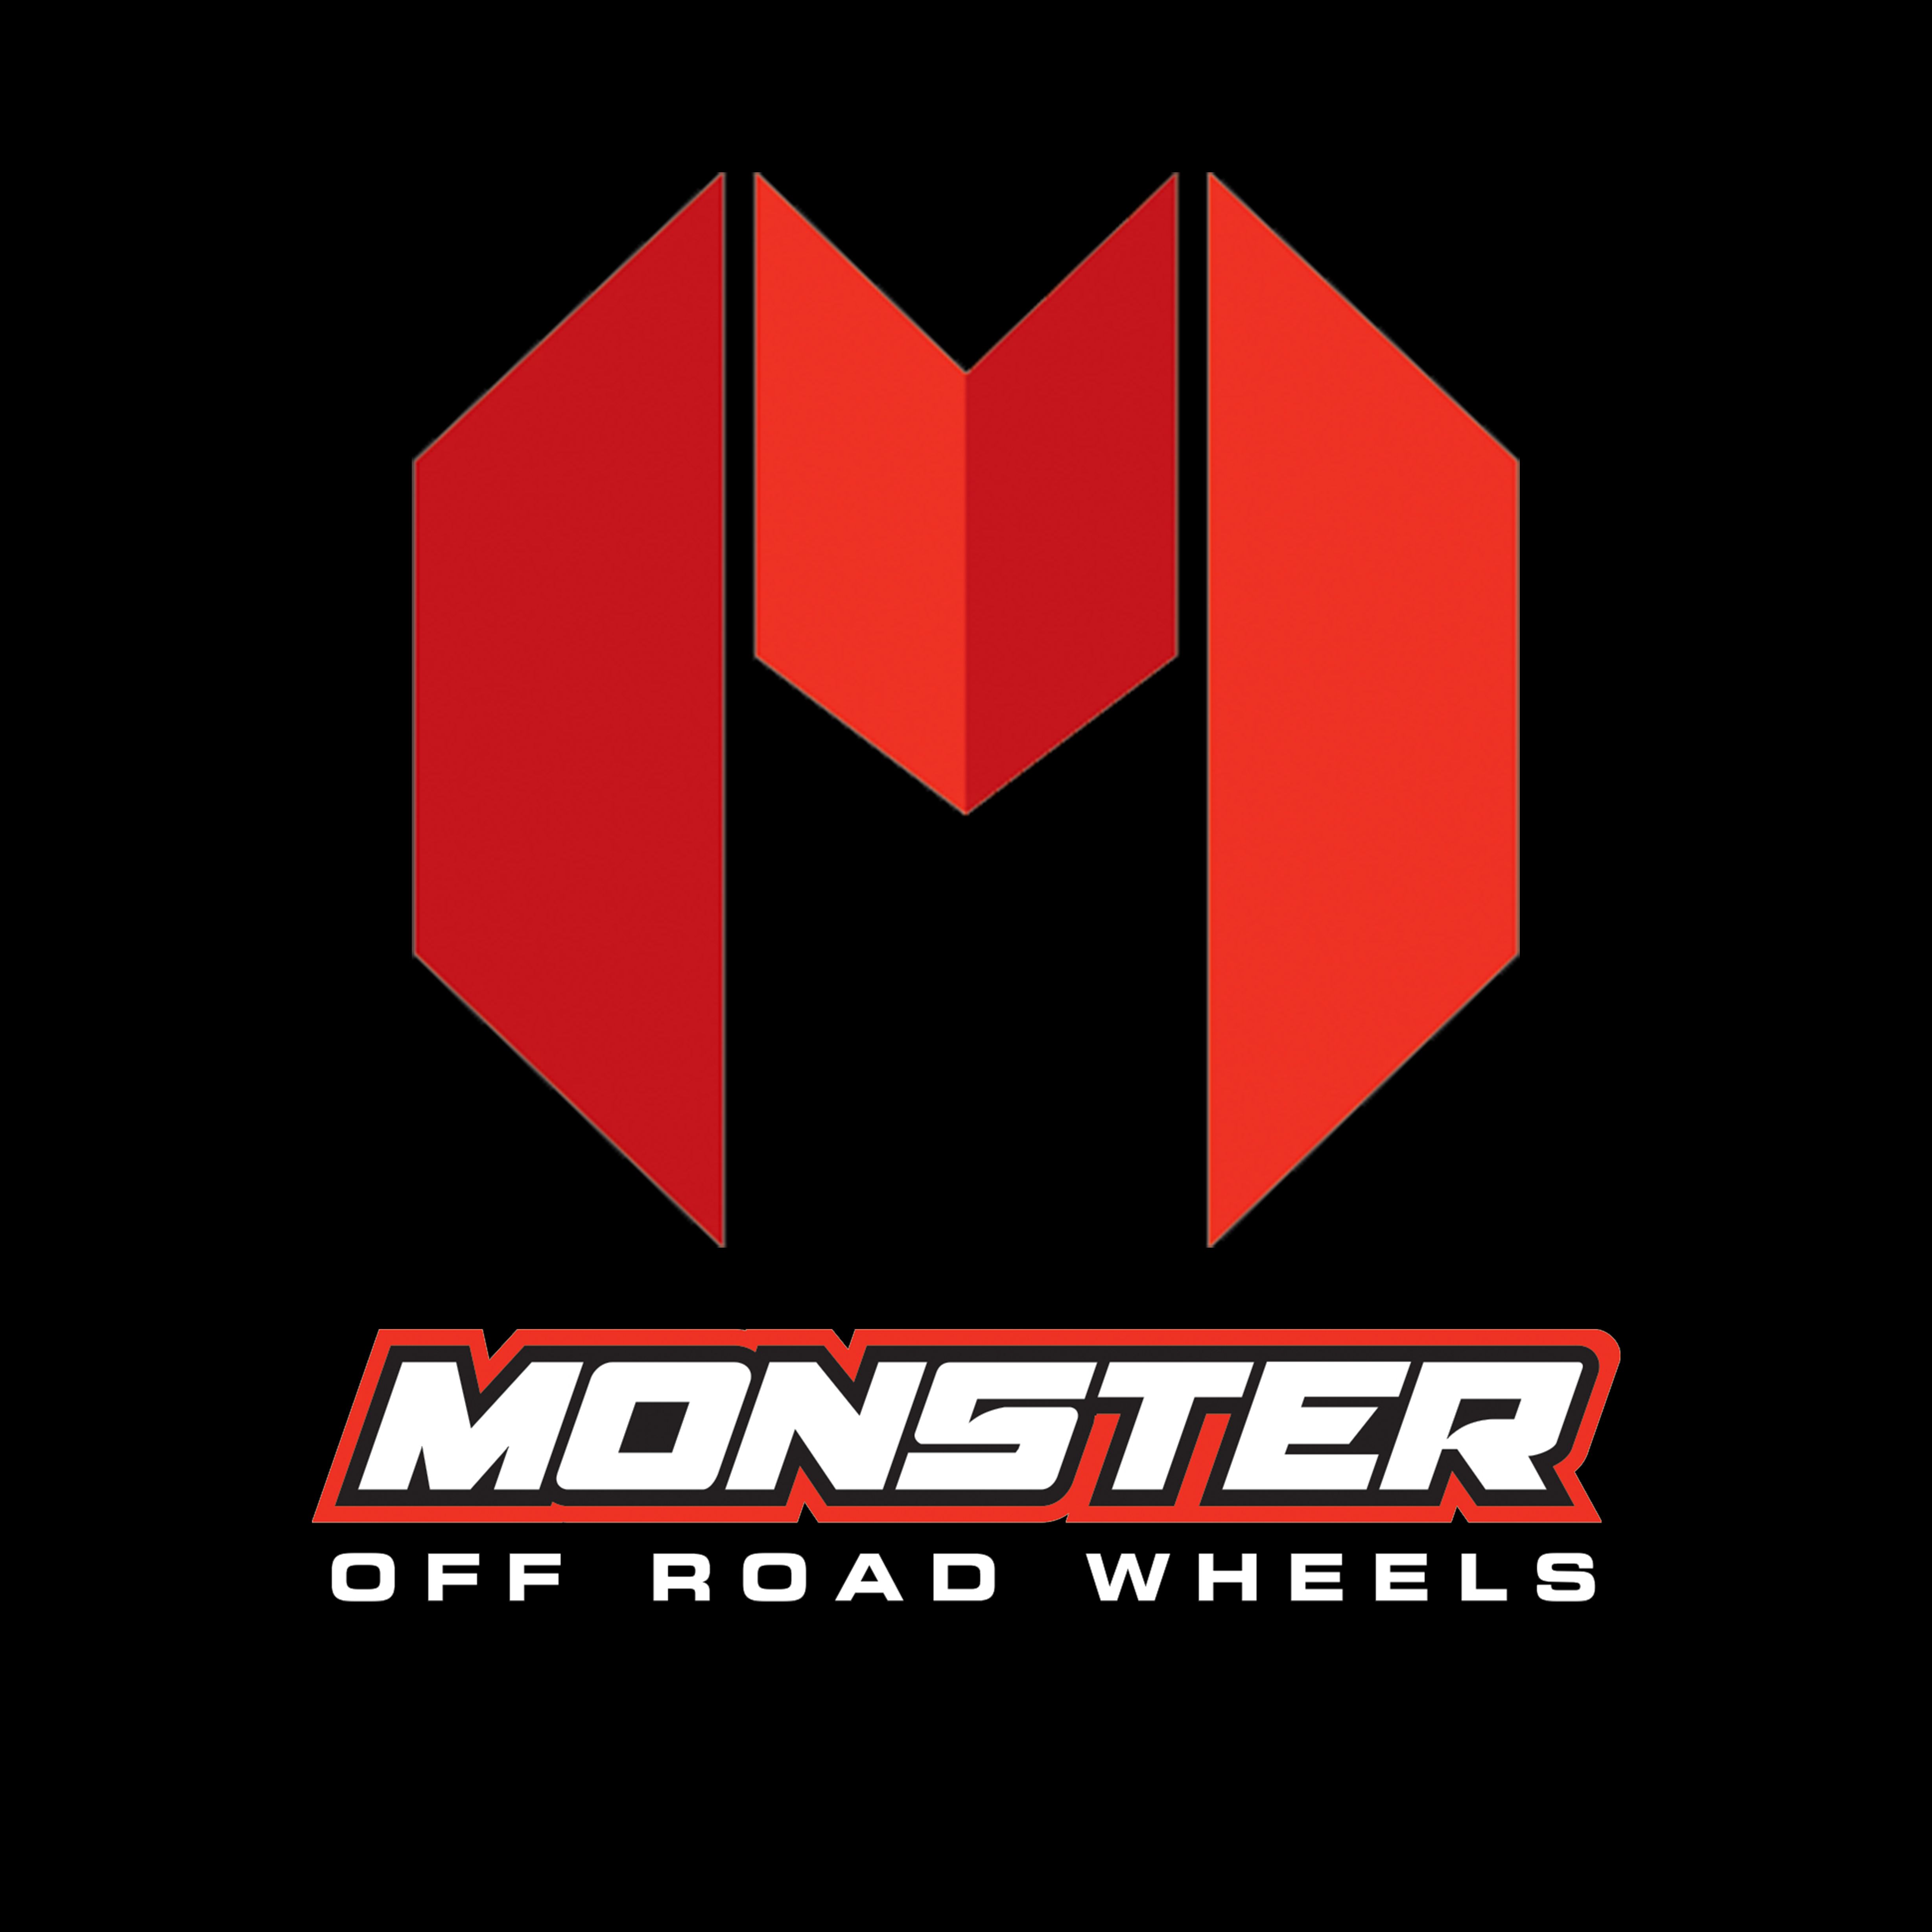 Monster ARTILLERY || Monster Off Road Wheels